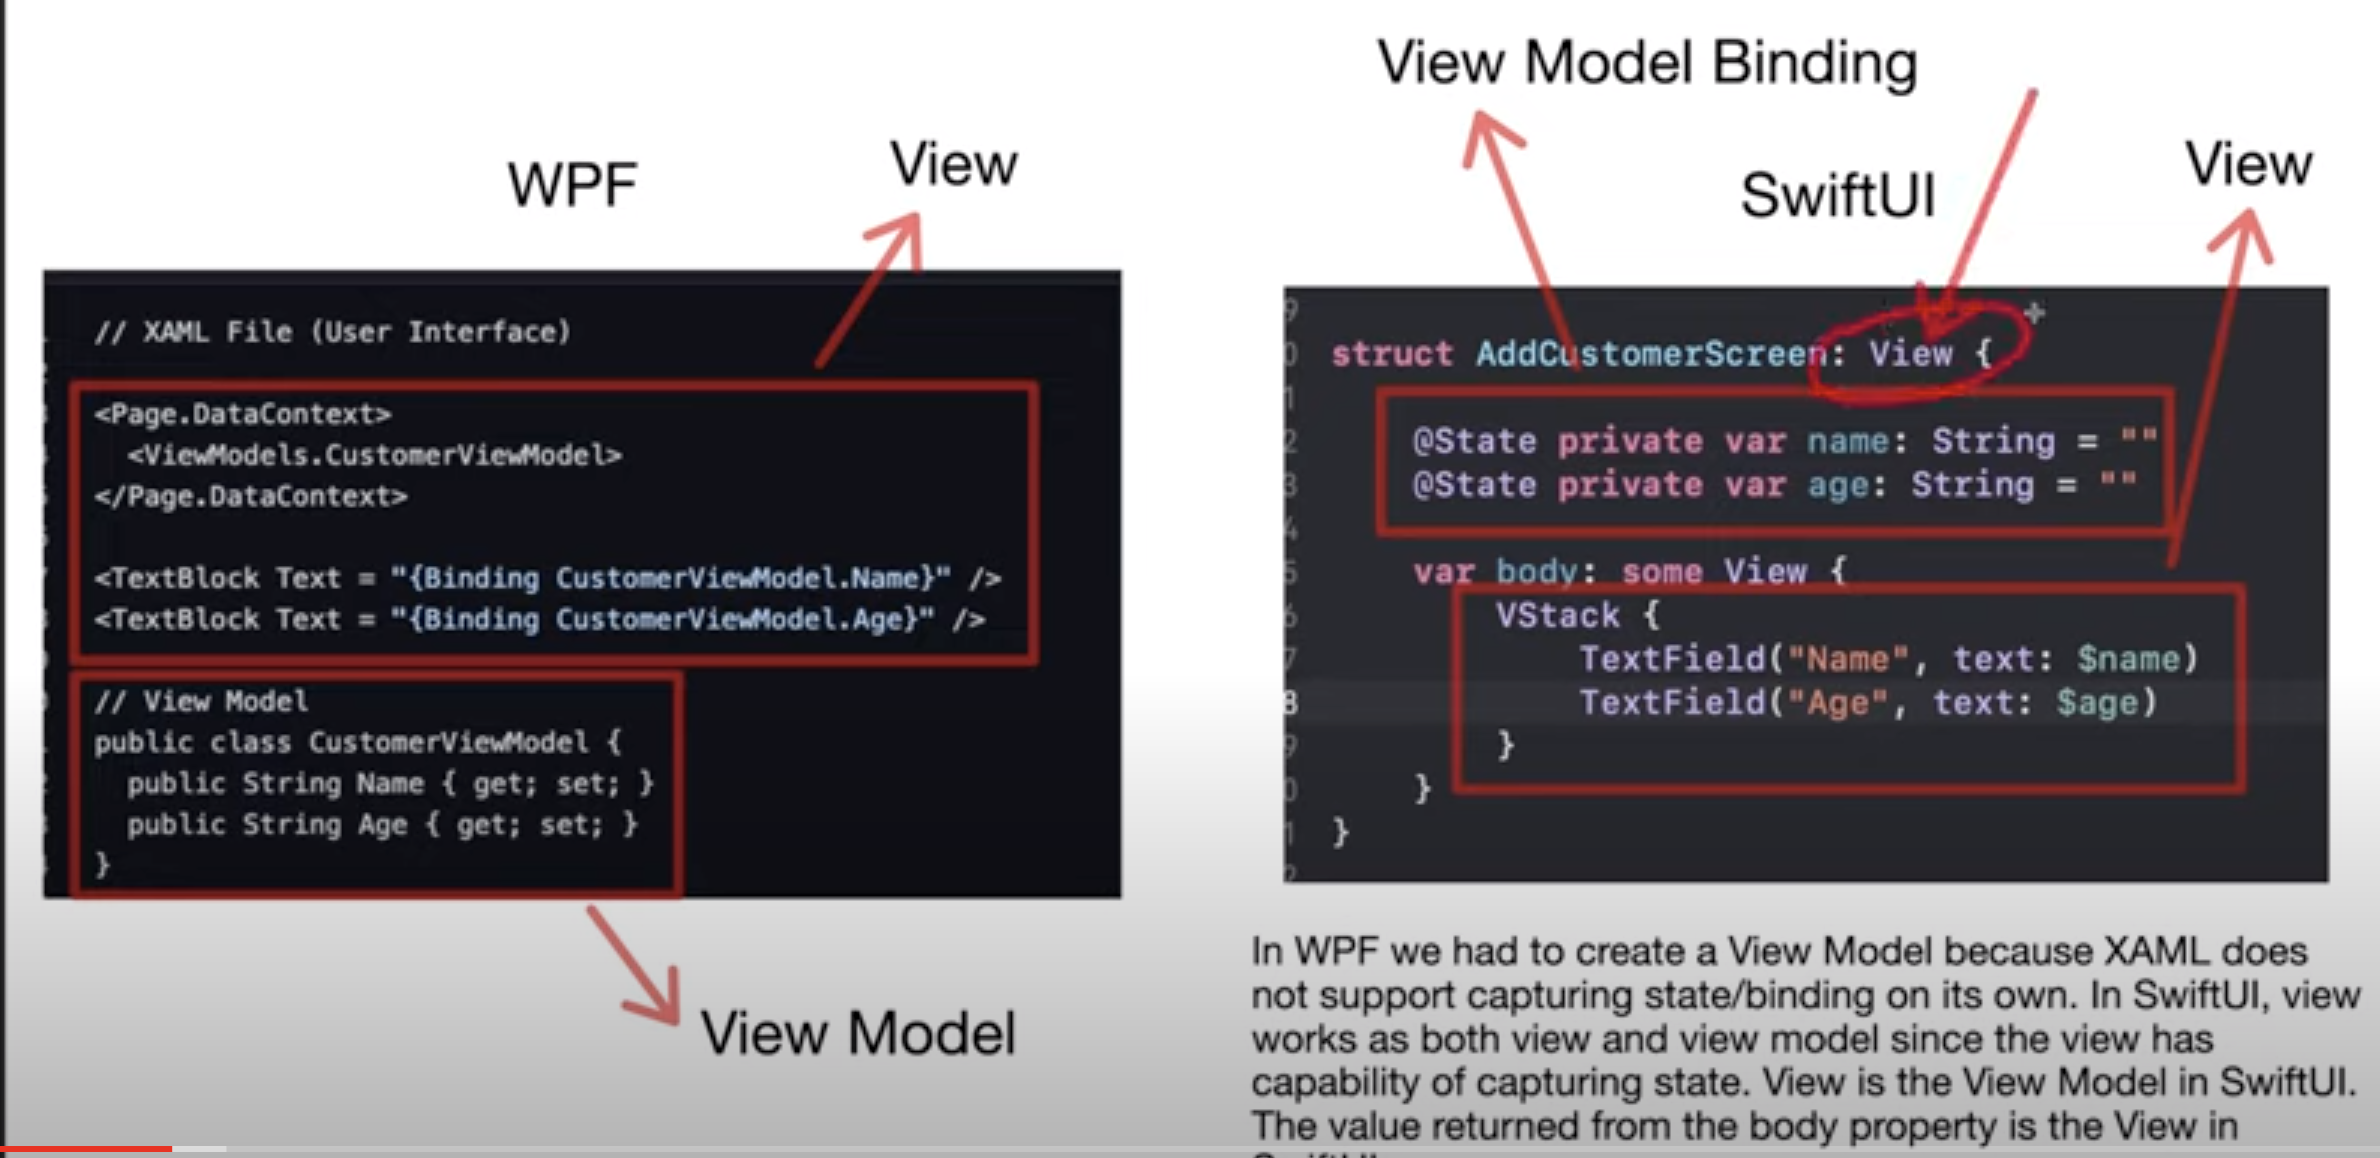 SwiftUI vs WPF